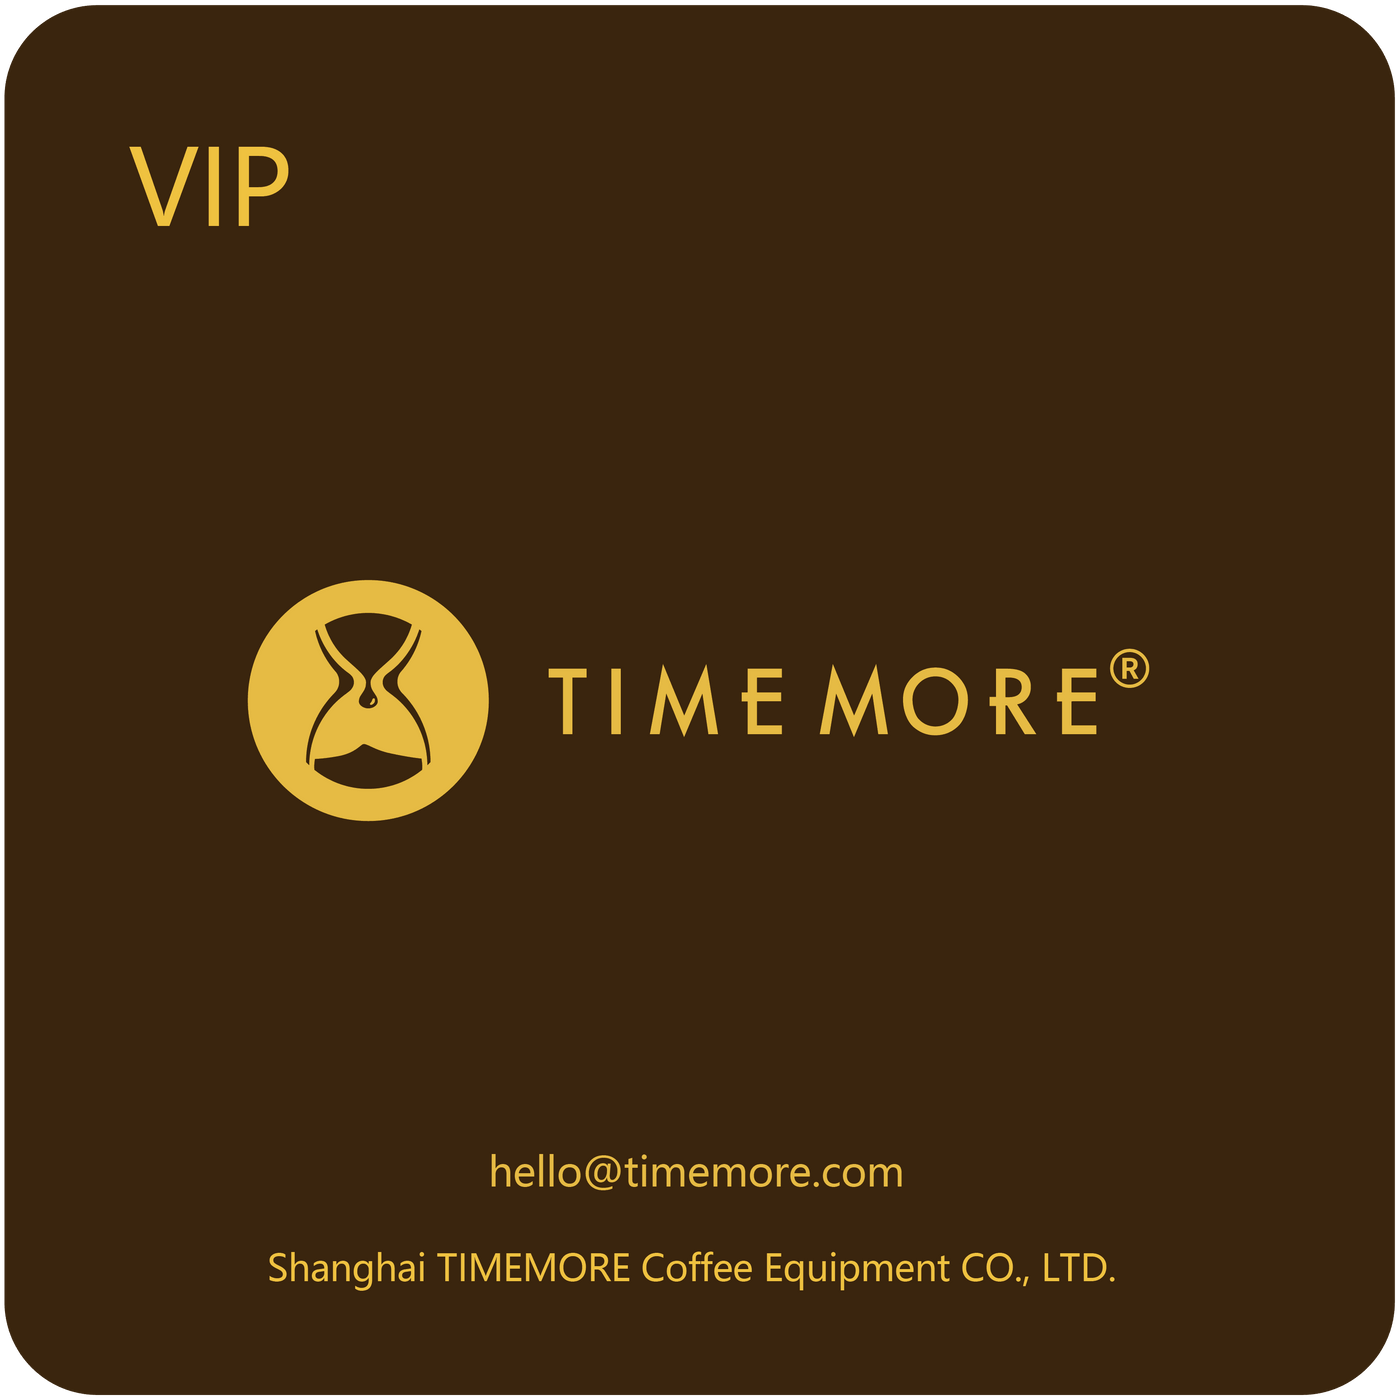 Tarjeta de membresía VIP de TIMEMORE